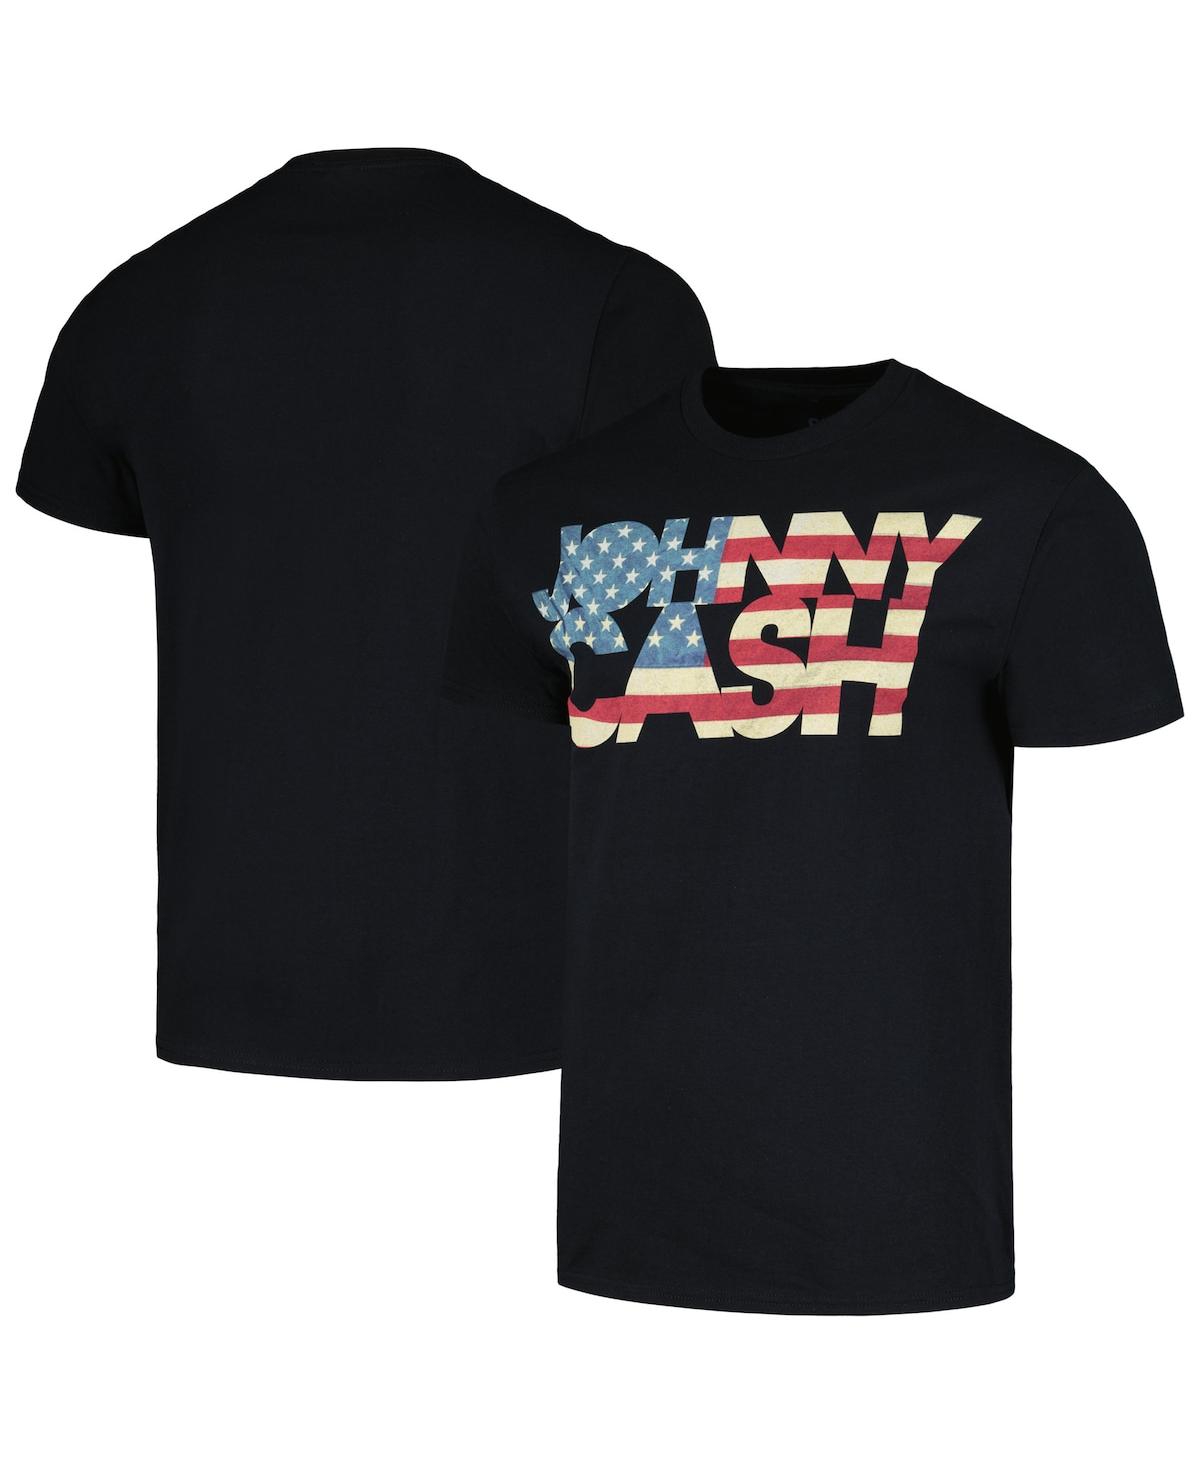 Shop Merch Traffic Men's And Women's Black Johnny Cash Ragged Old Flag T-shirt